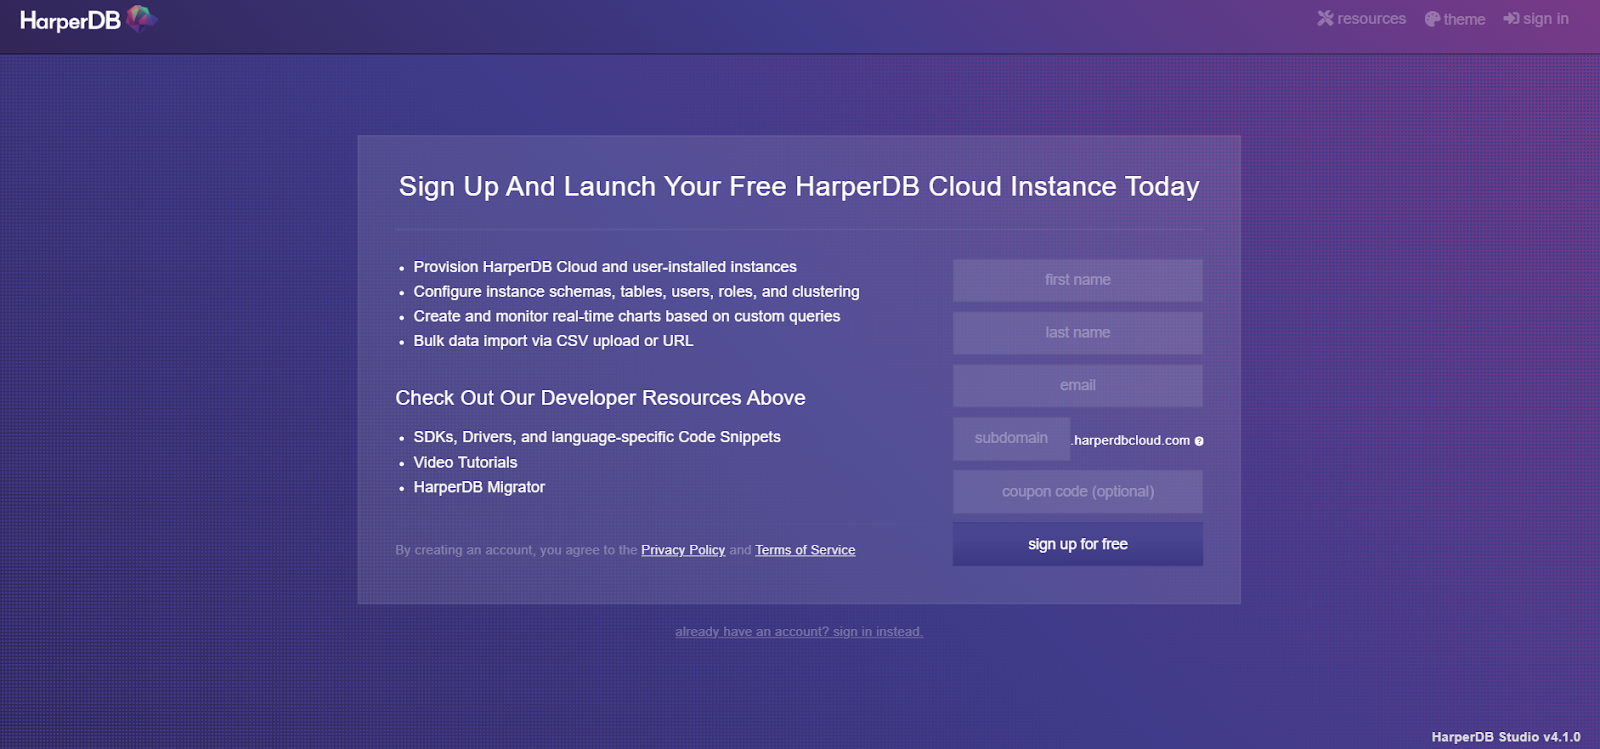 HarperDB-cloud